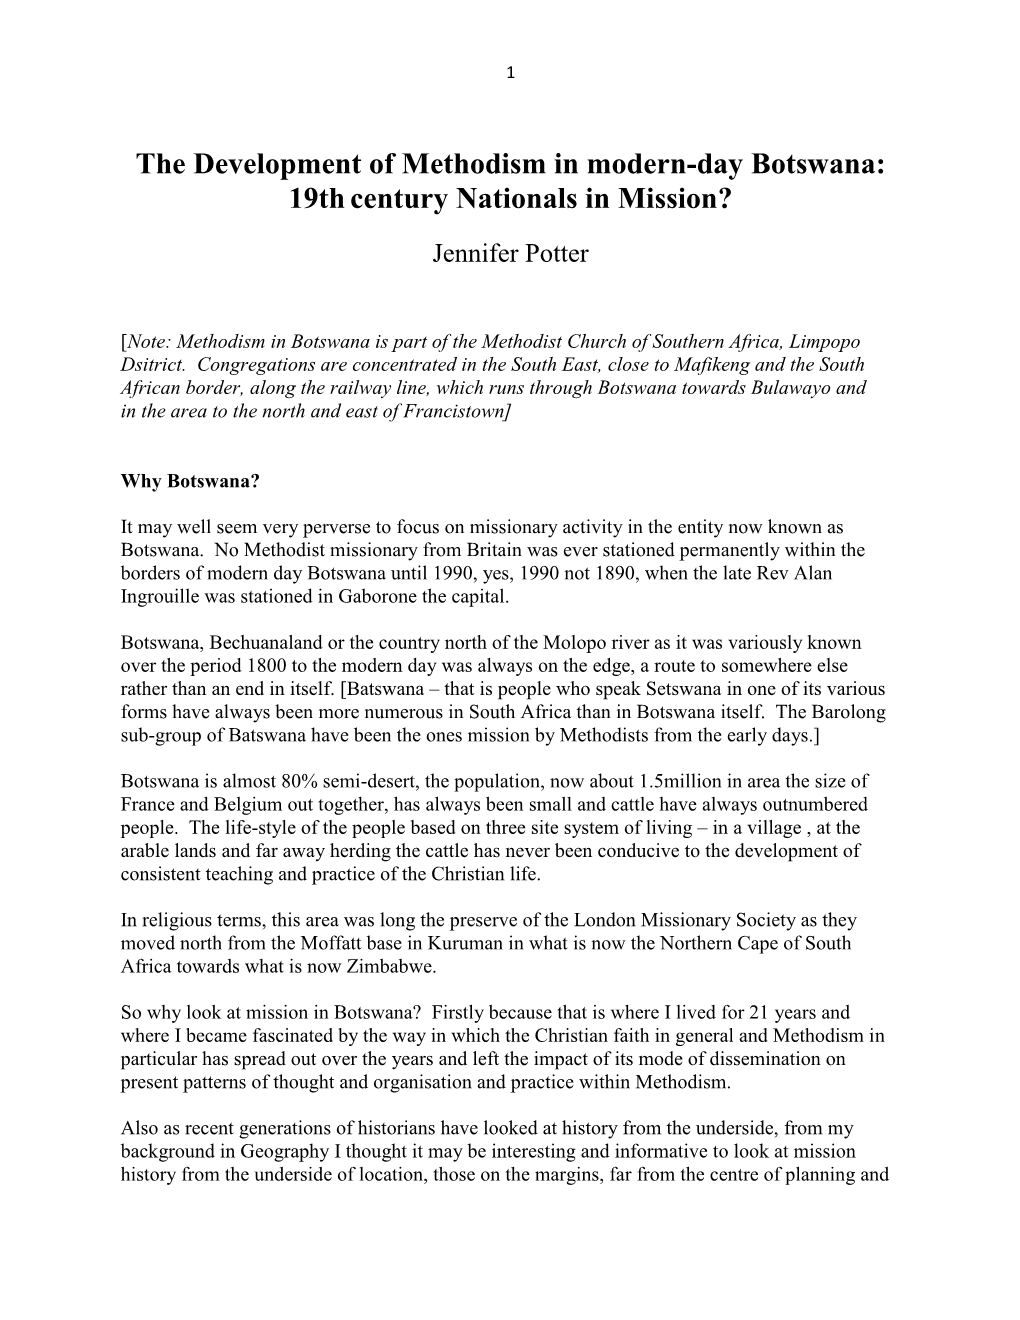 The Development of Methodism in Modern-Day Botswana